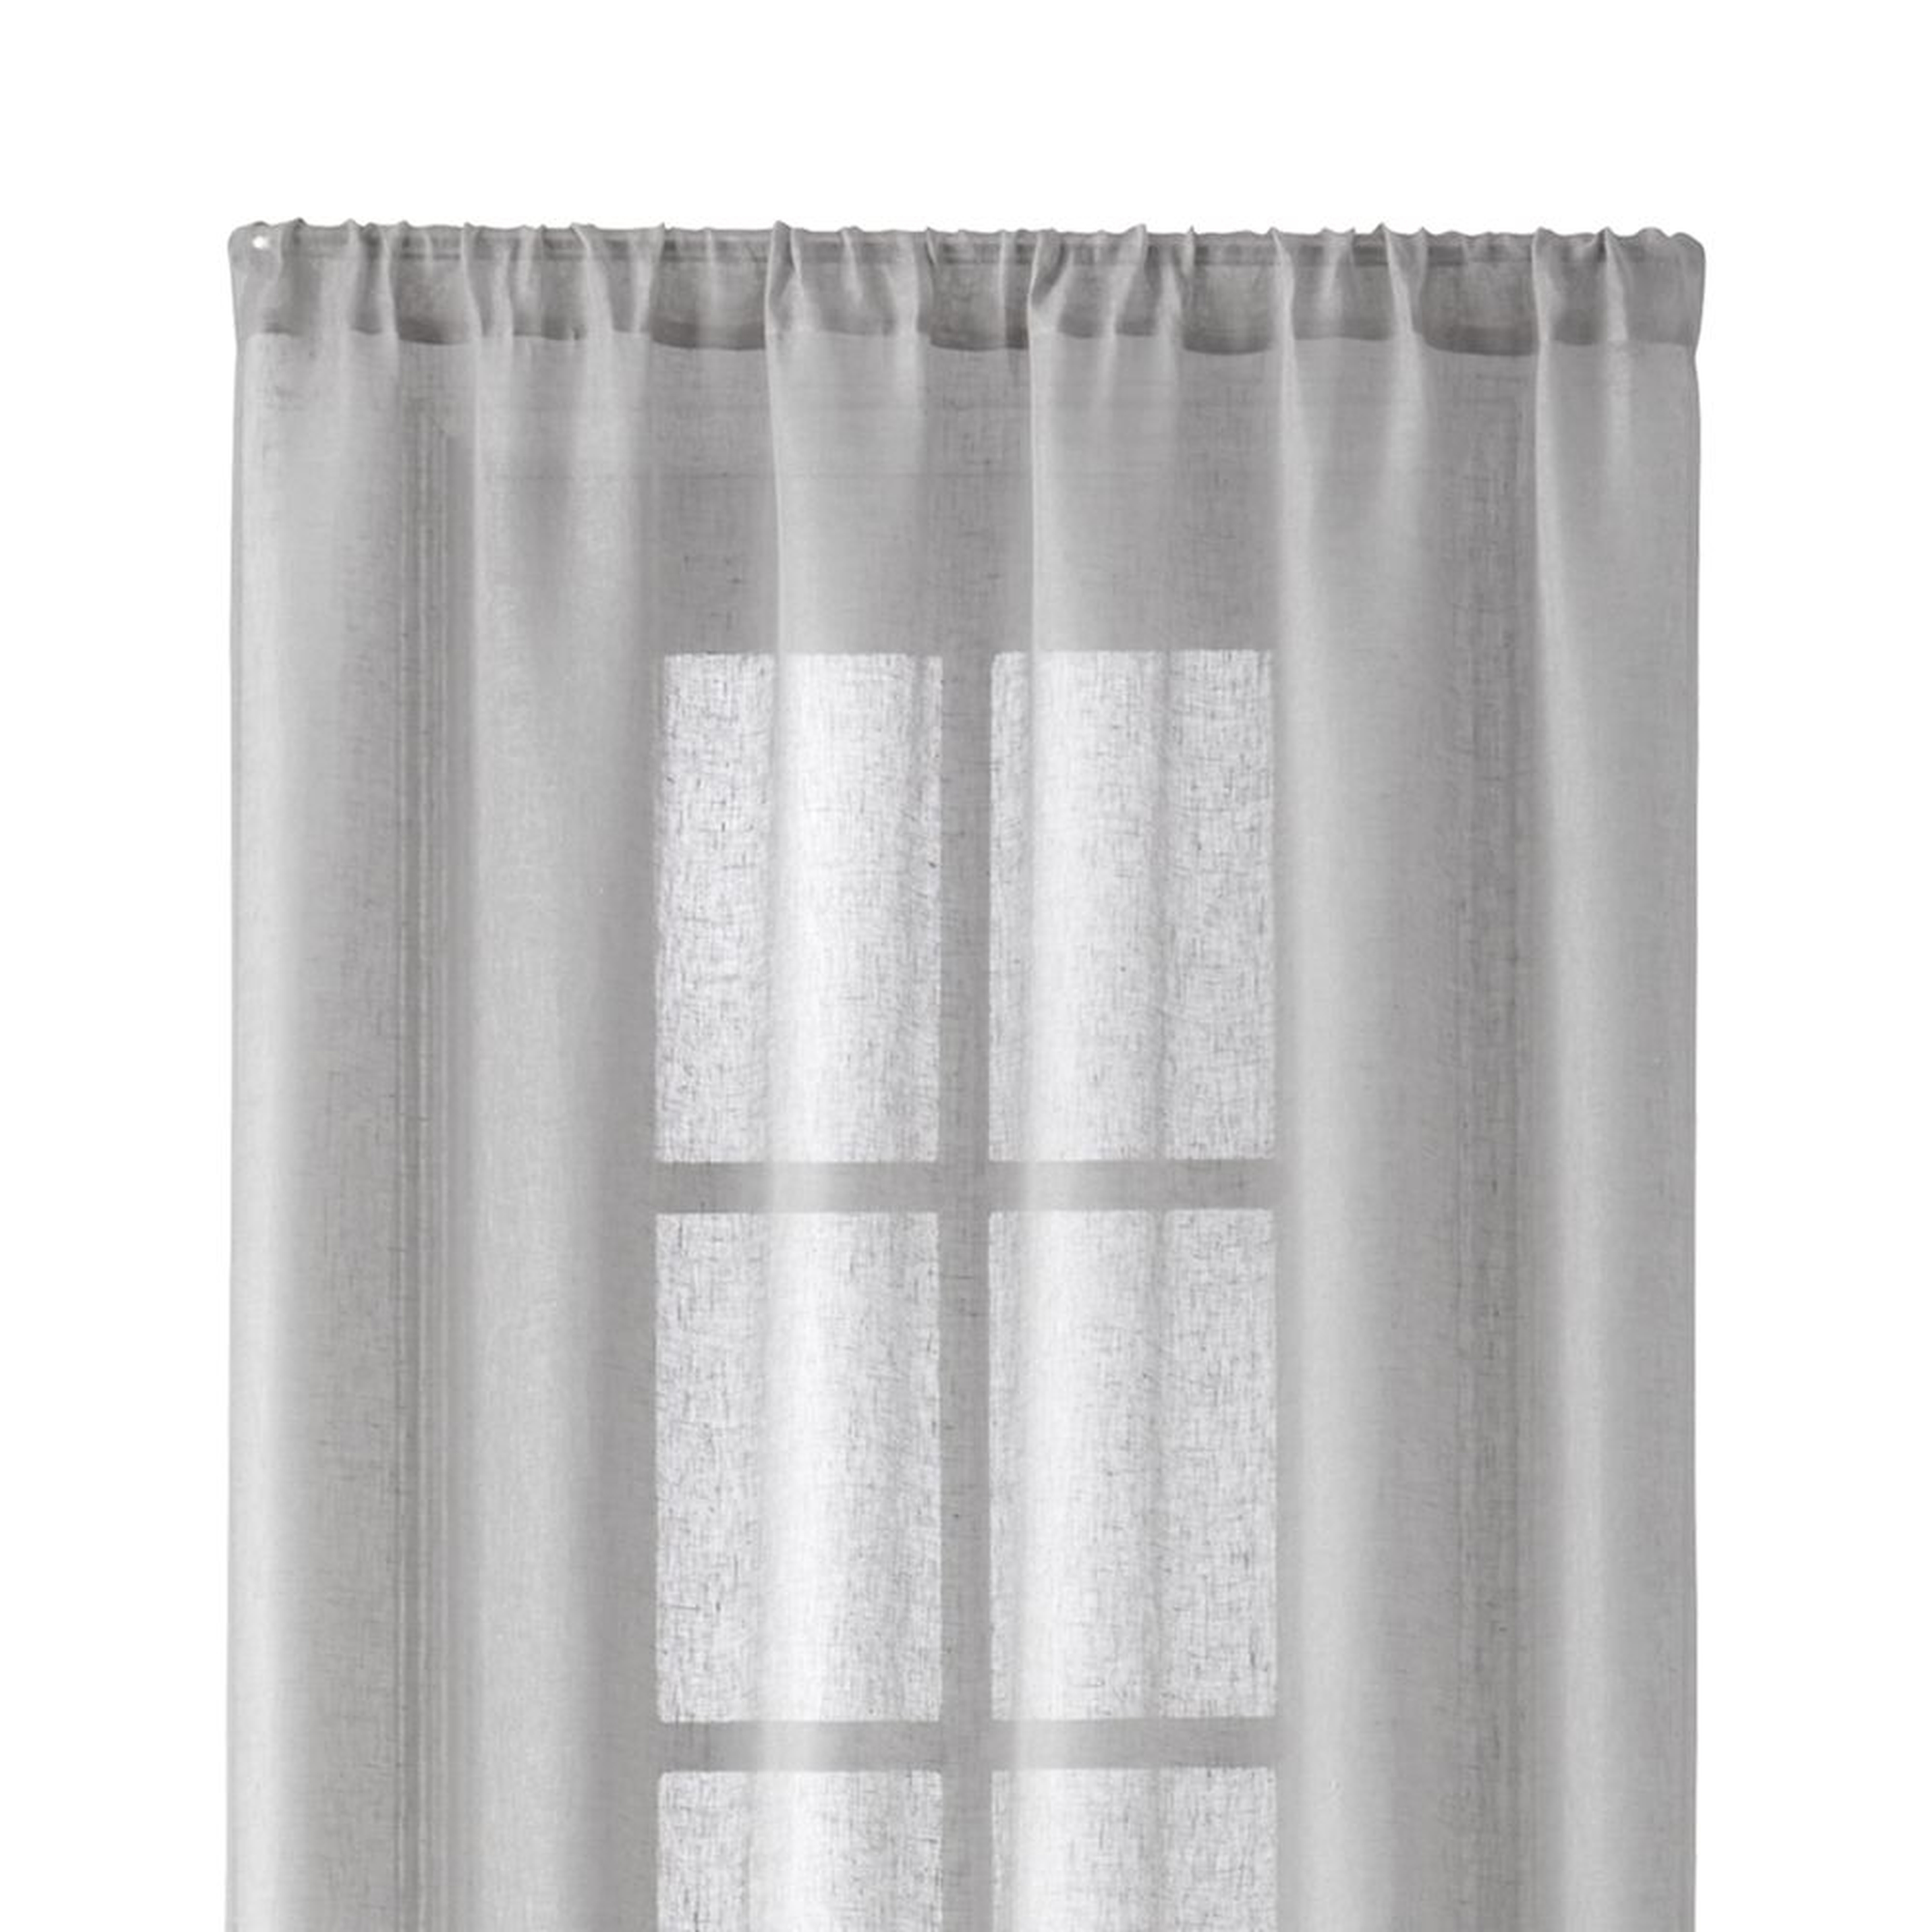 Linen Sheer 52x84 Light Grey Curtain Panel - Crate and Barrel